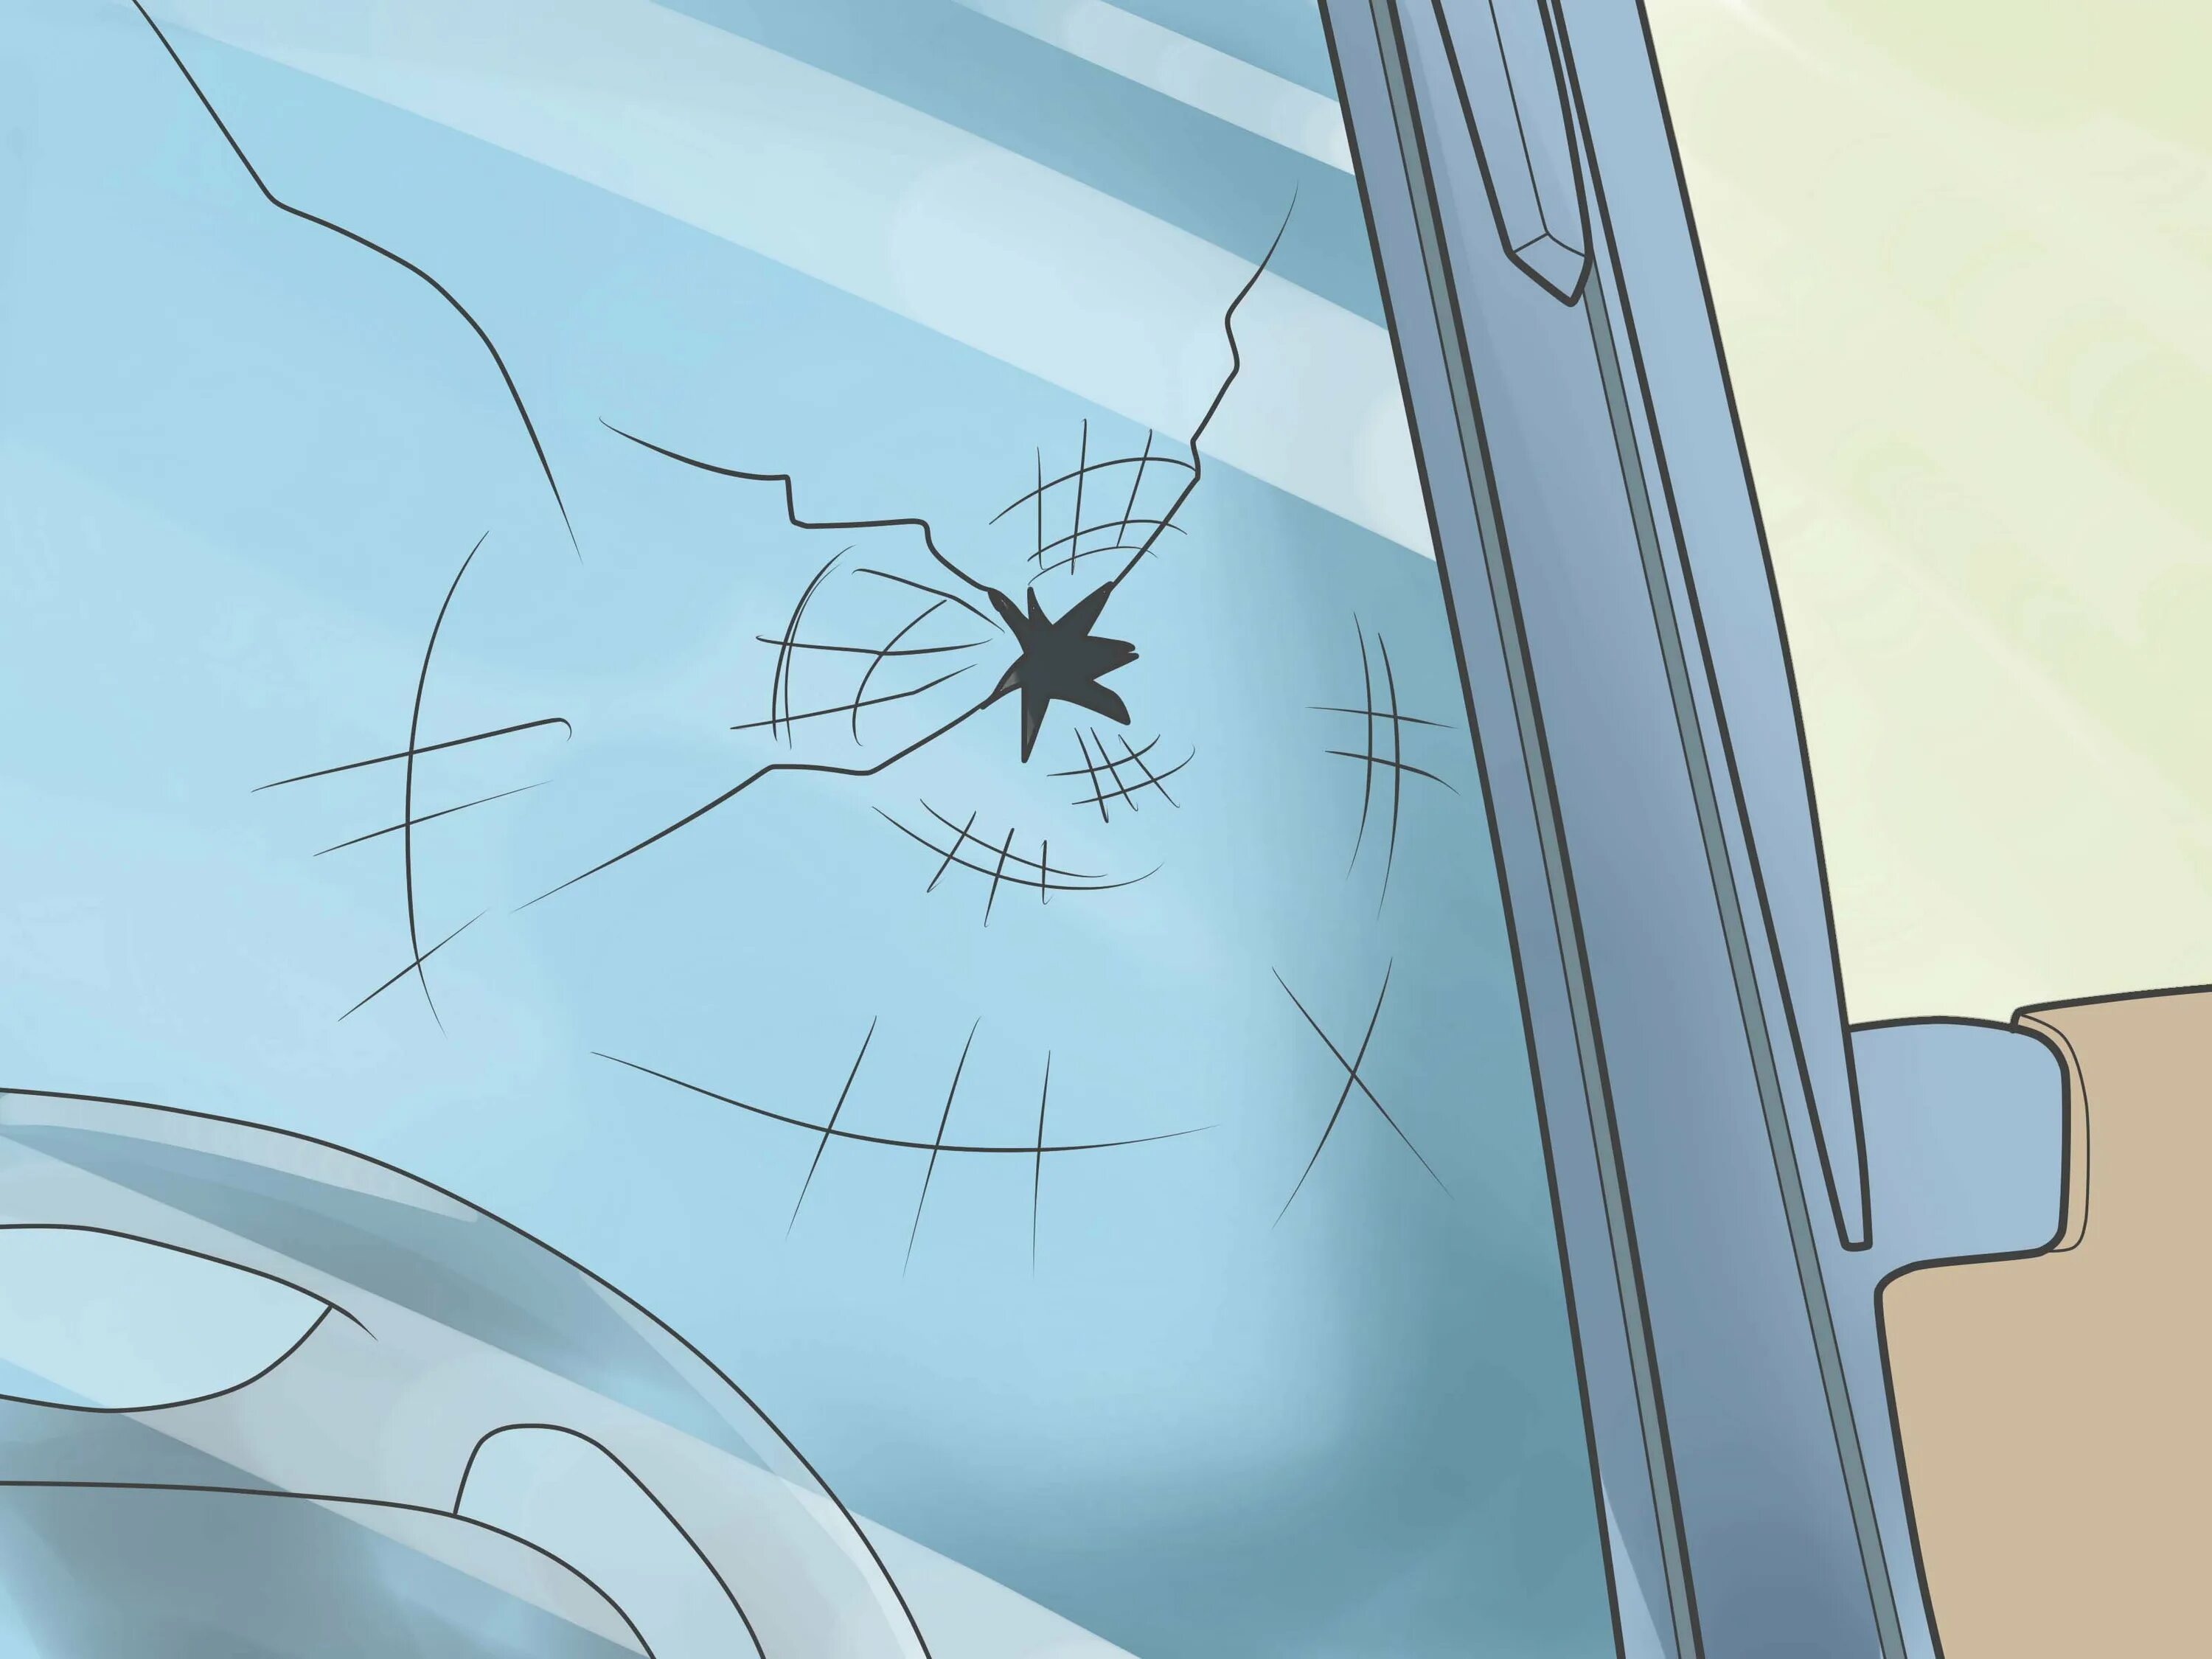 Разбитое стекло. Трещина на лобовом стекле. Разбитое лобовое стекло. Разбитое стекло автомобиля.